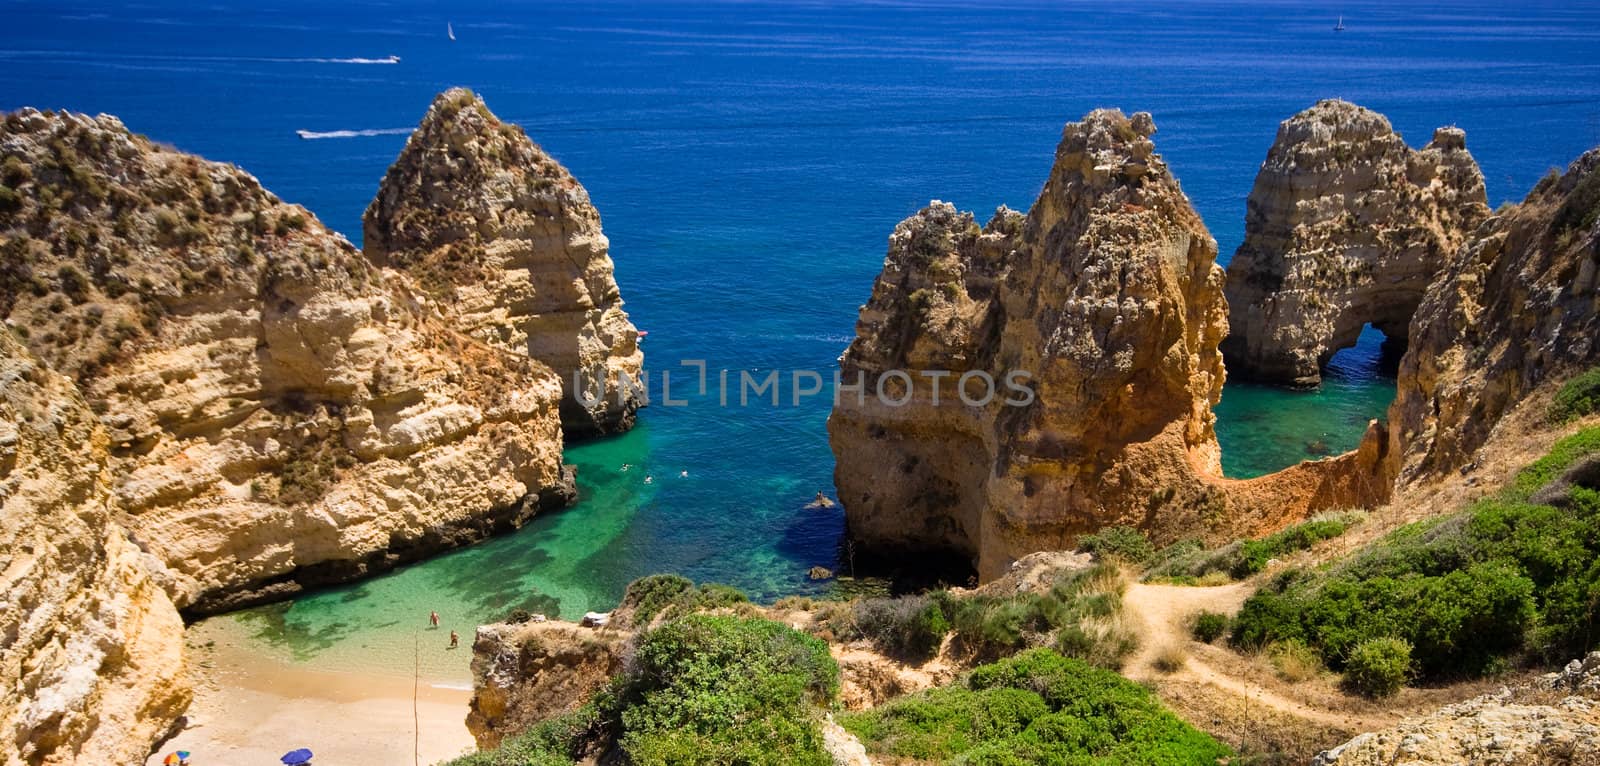 Algarve rock - coast in Portugal by anobis